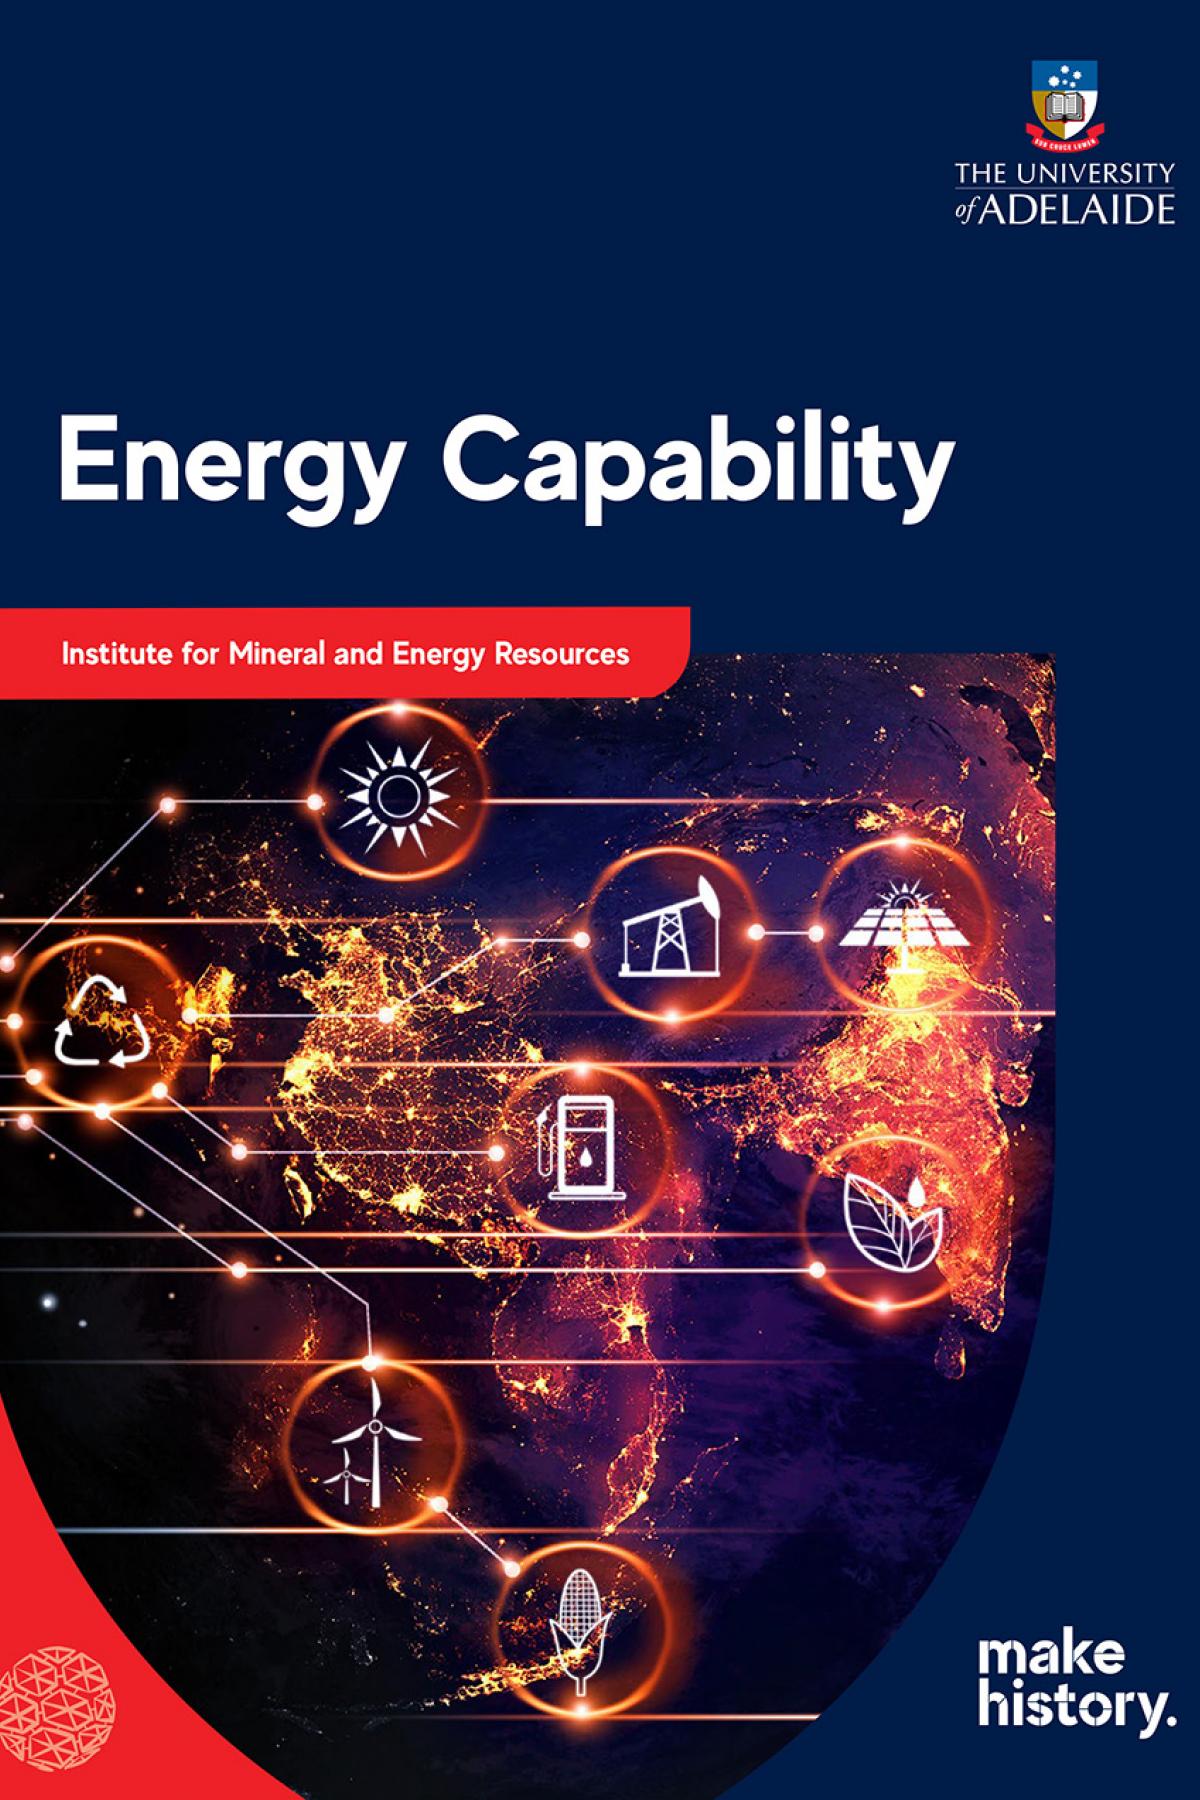 Energy capability